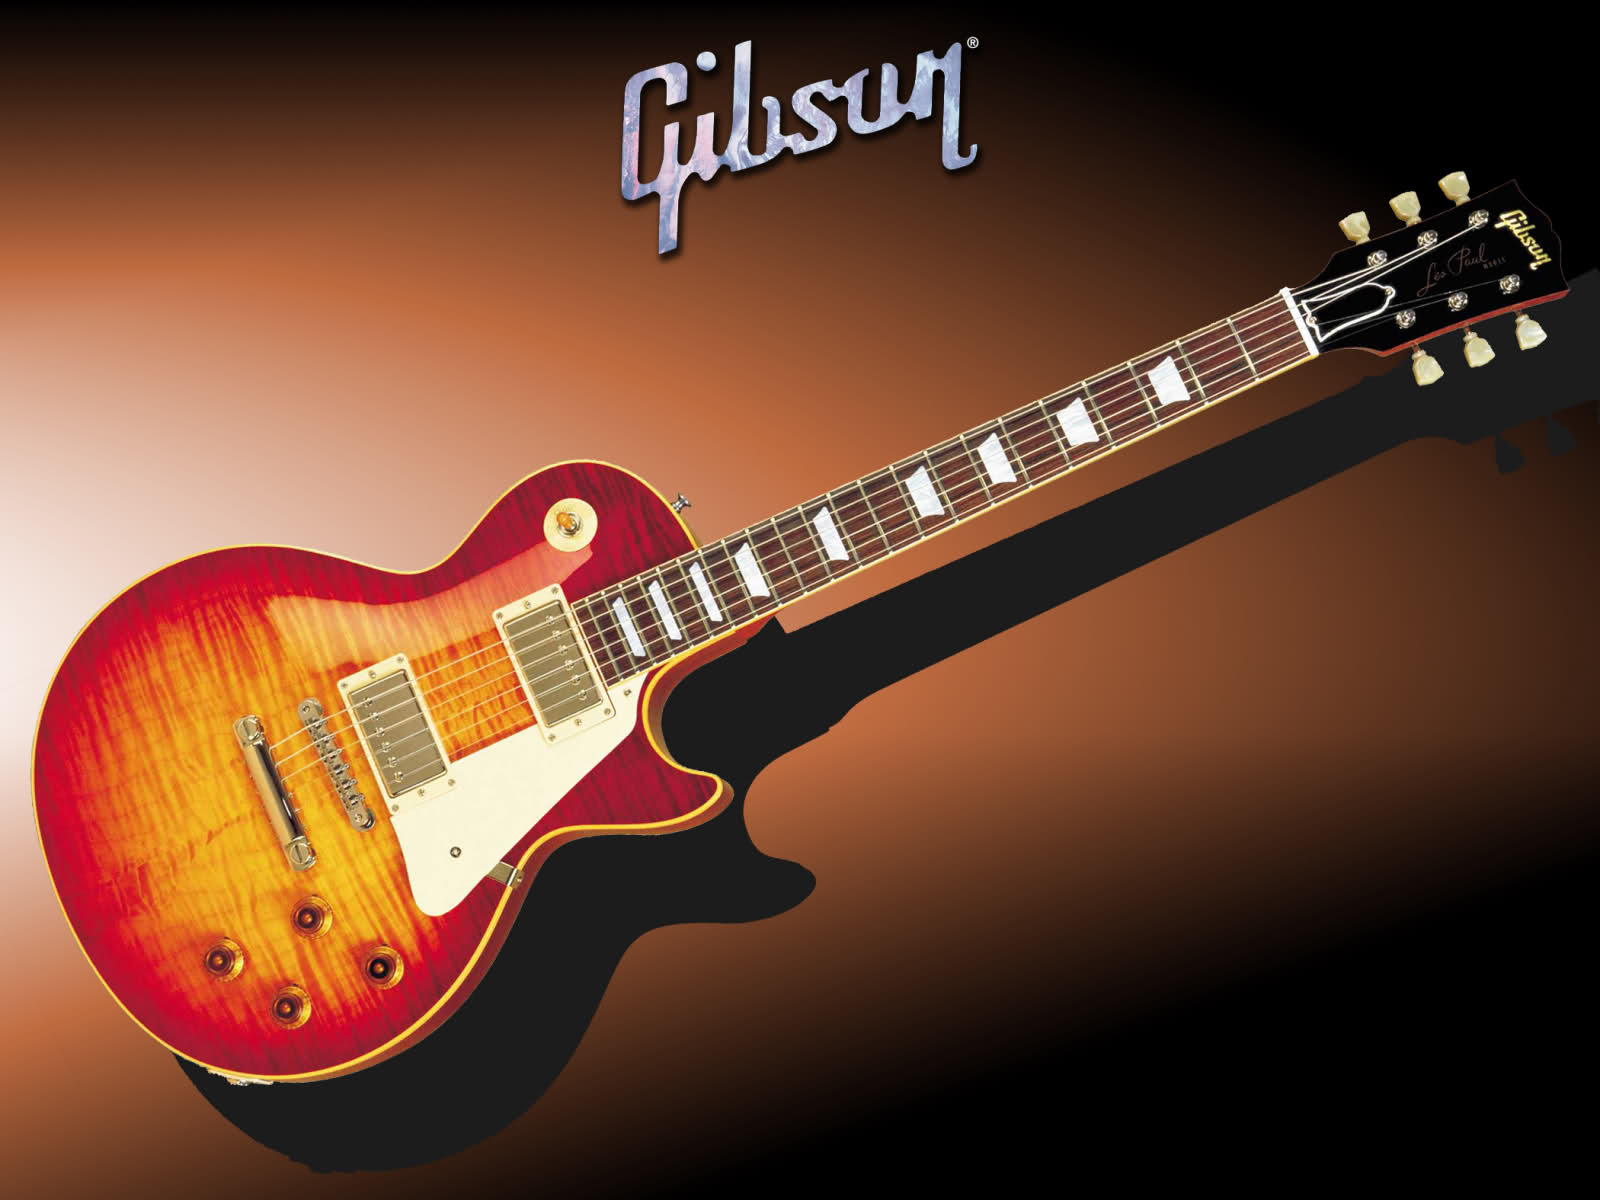 [50+] Gibson Guitar Wallpaper on WallpaperSafari